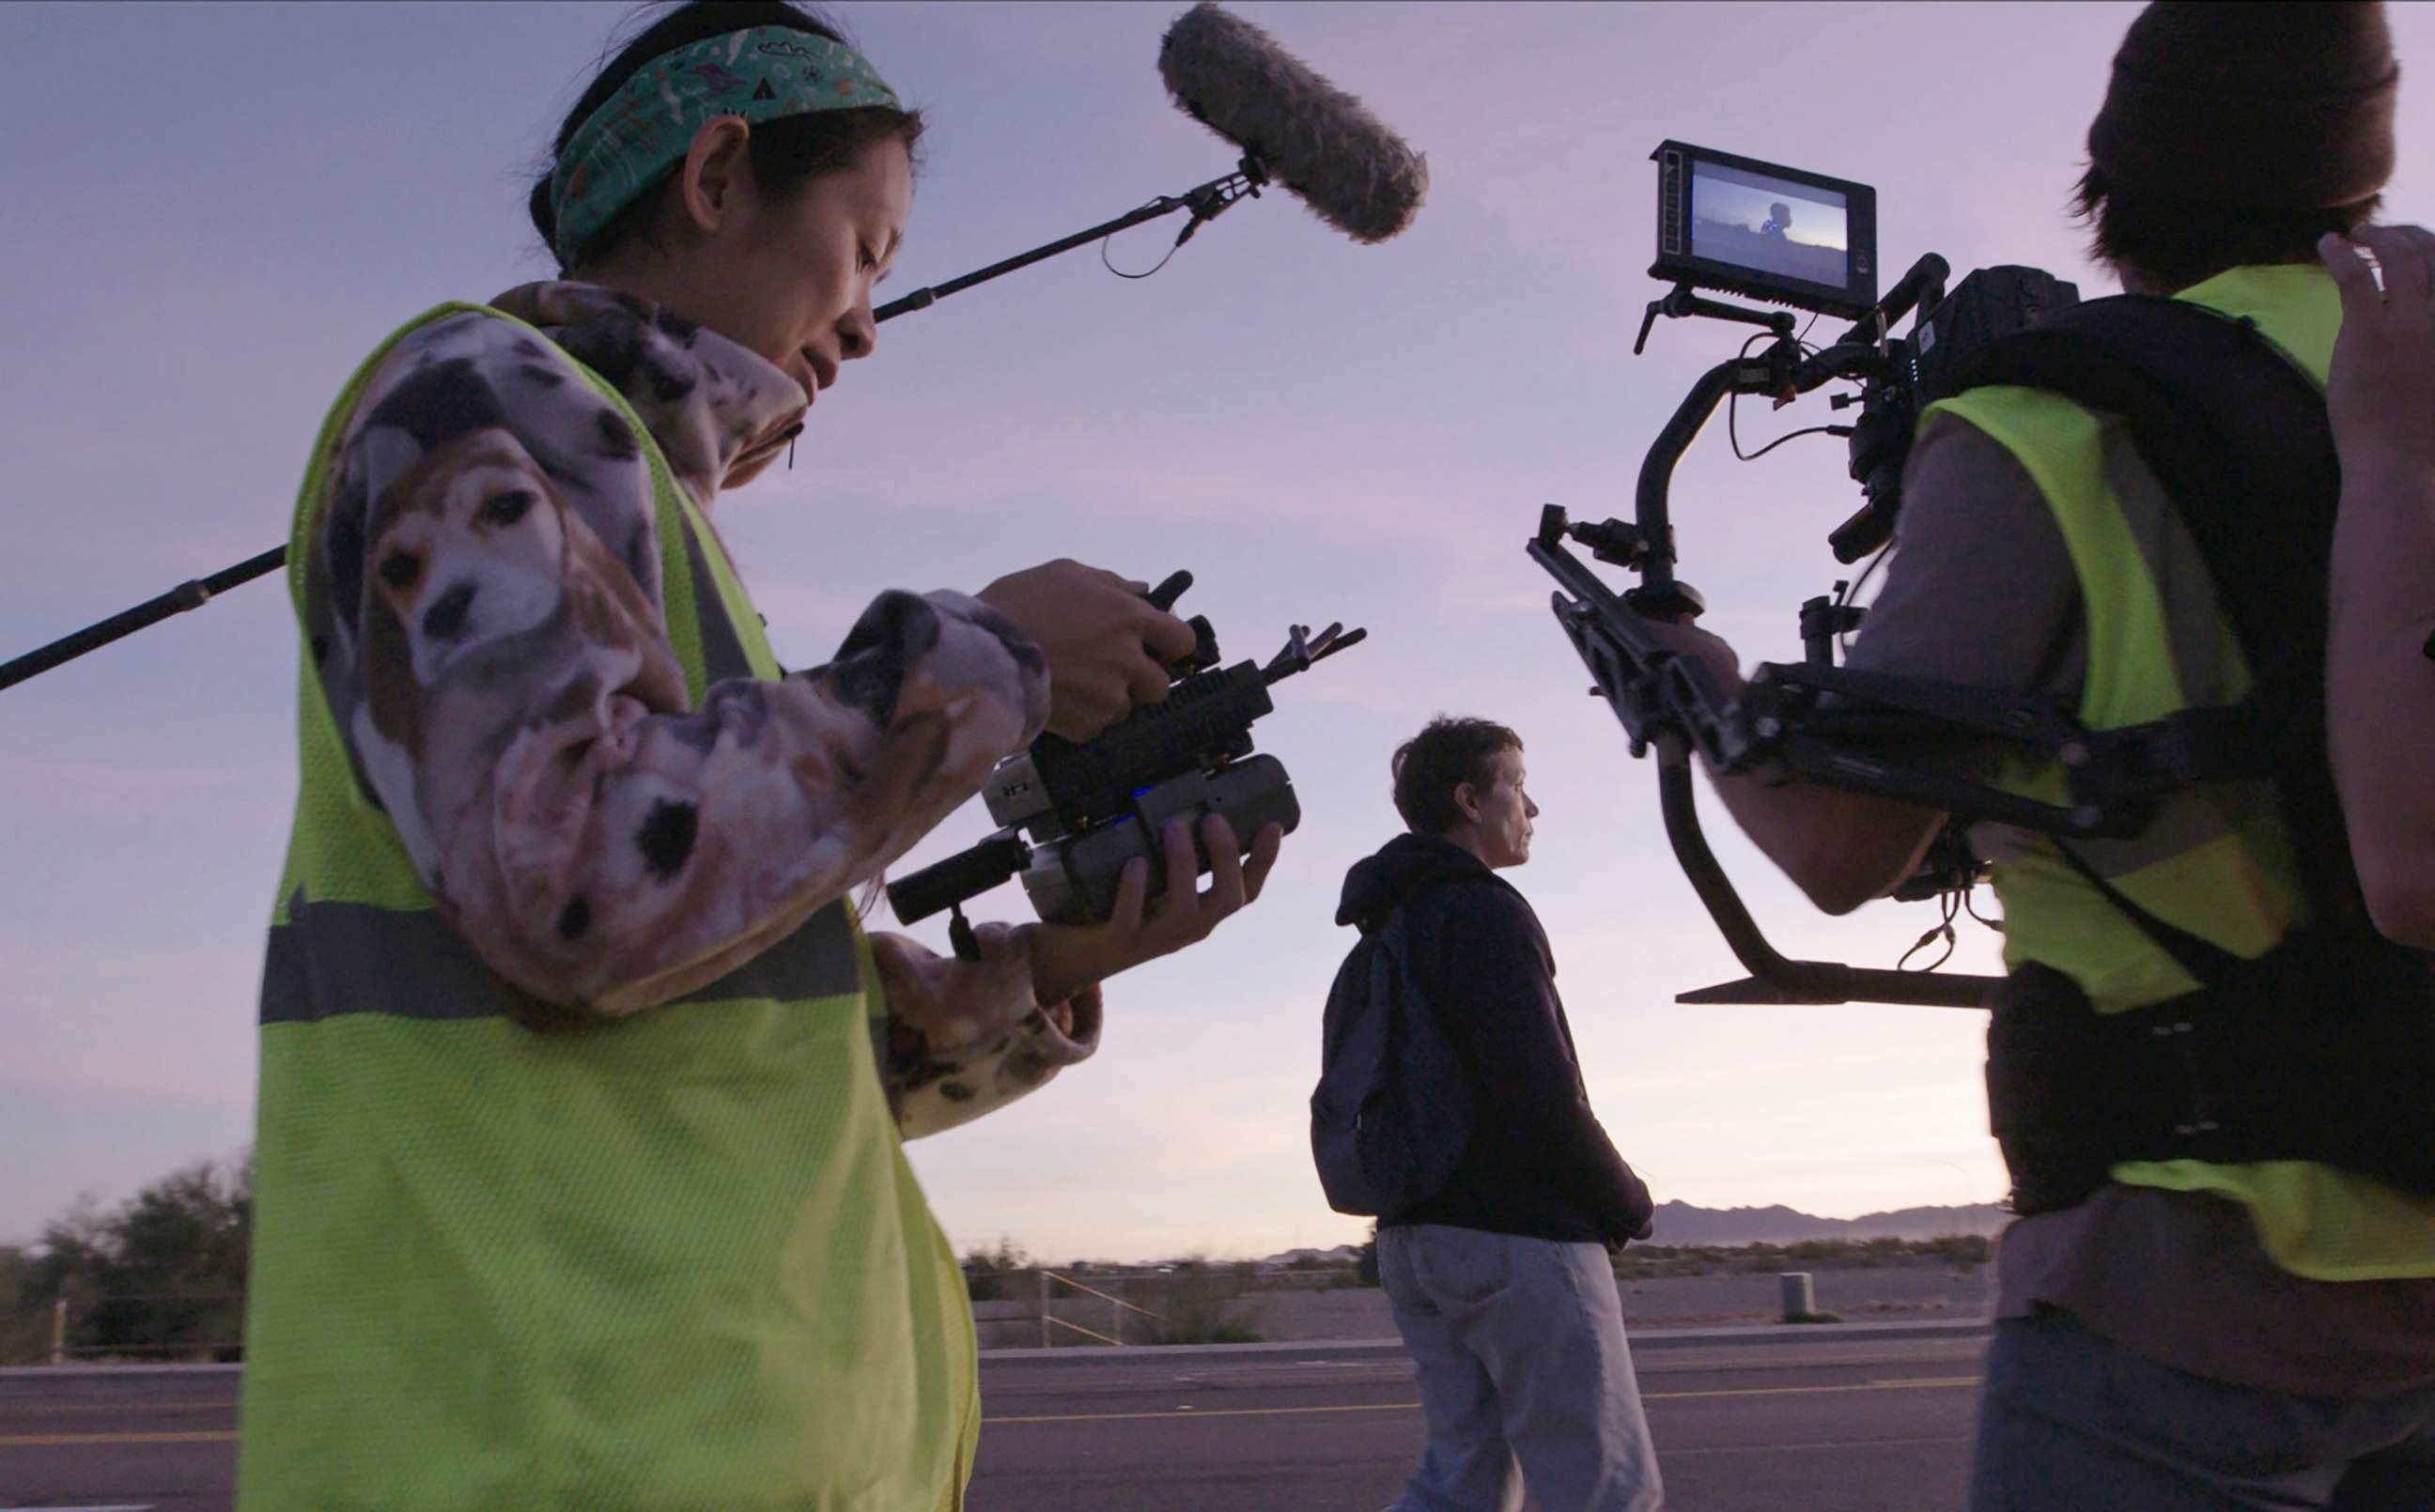 PHOTO: Writer-director Chloe Zhao, left, and Frances McDormand, center, on the set of "Nomadland."